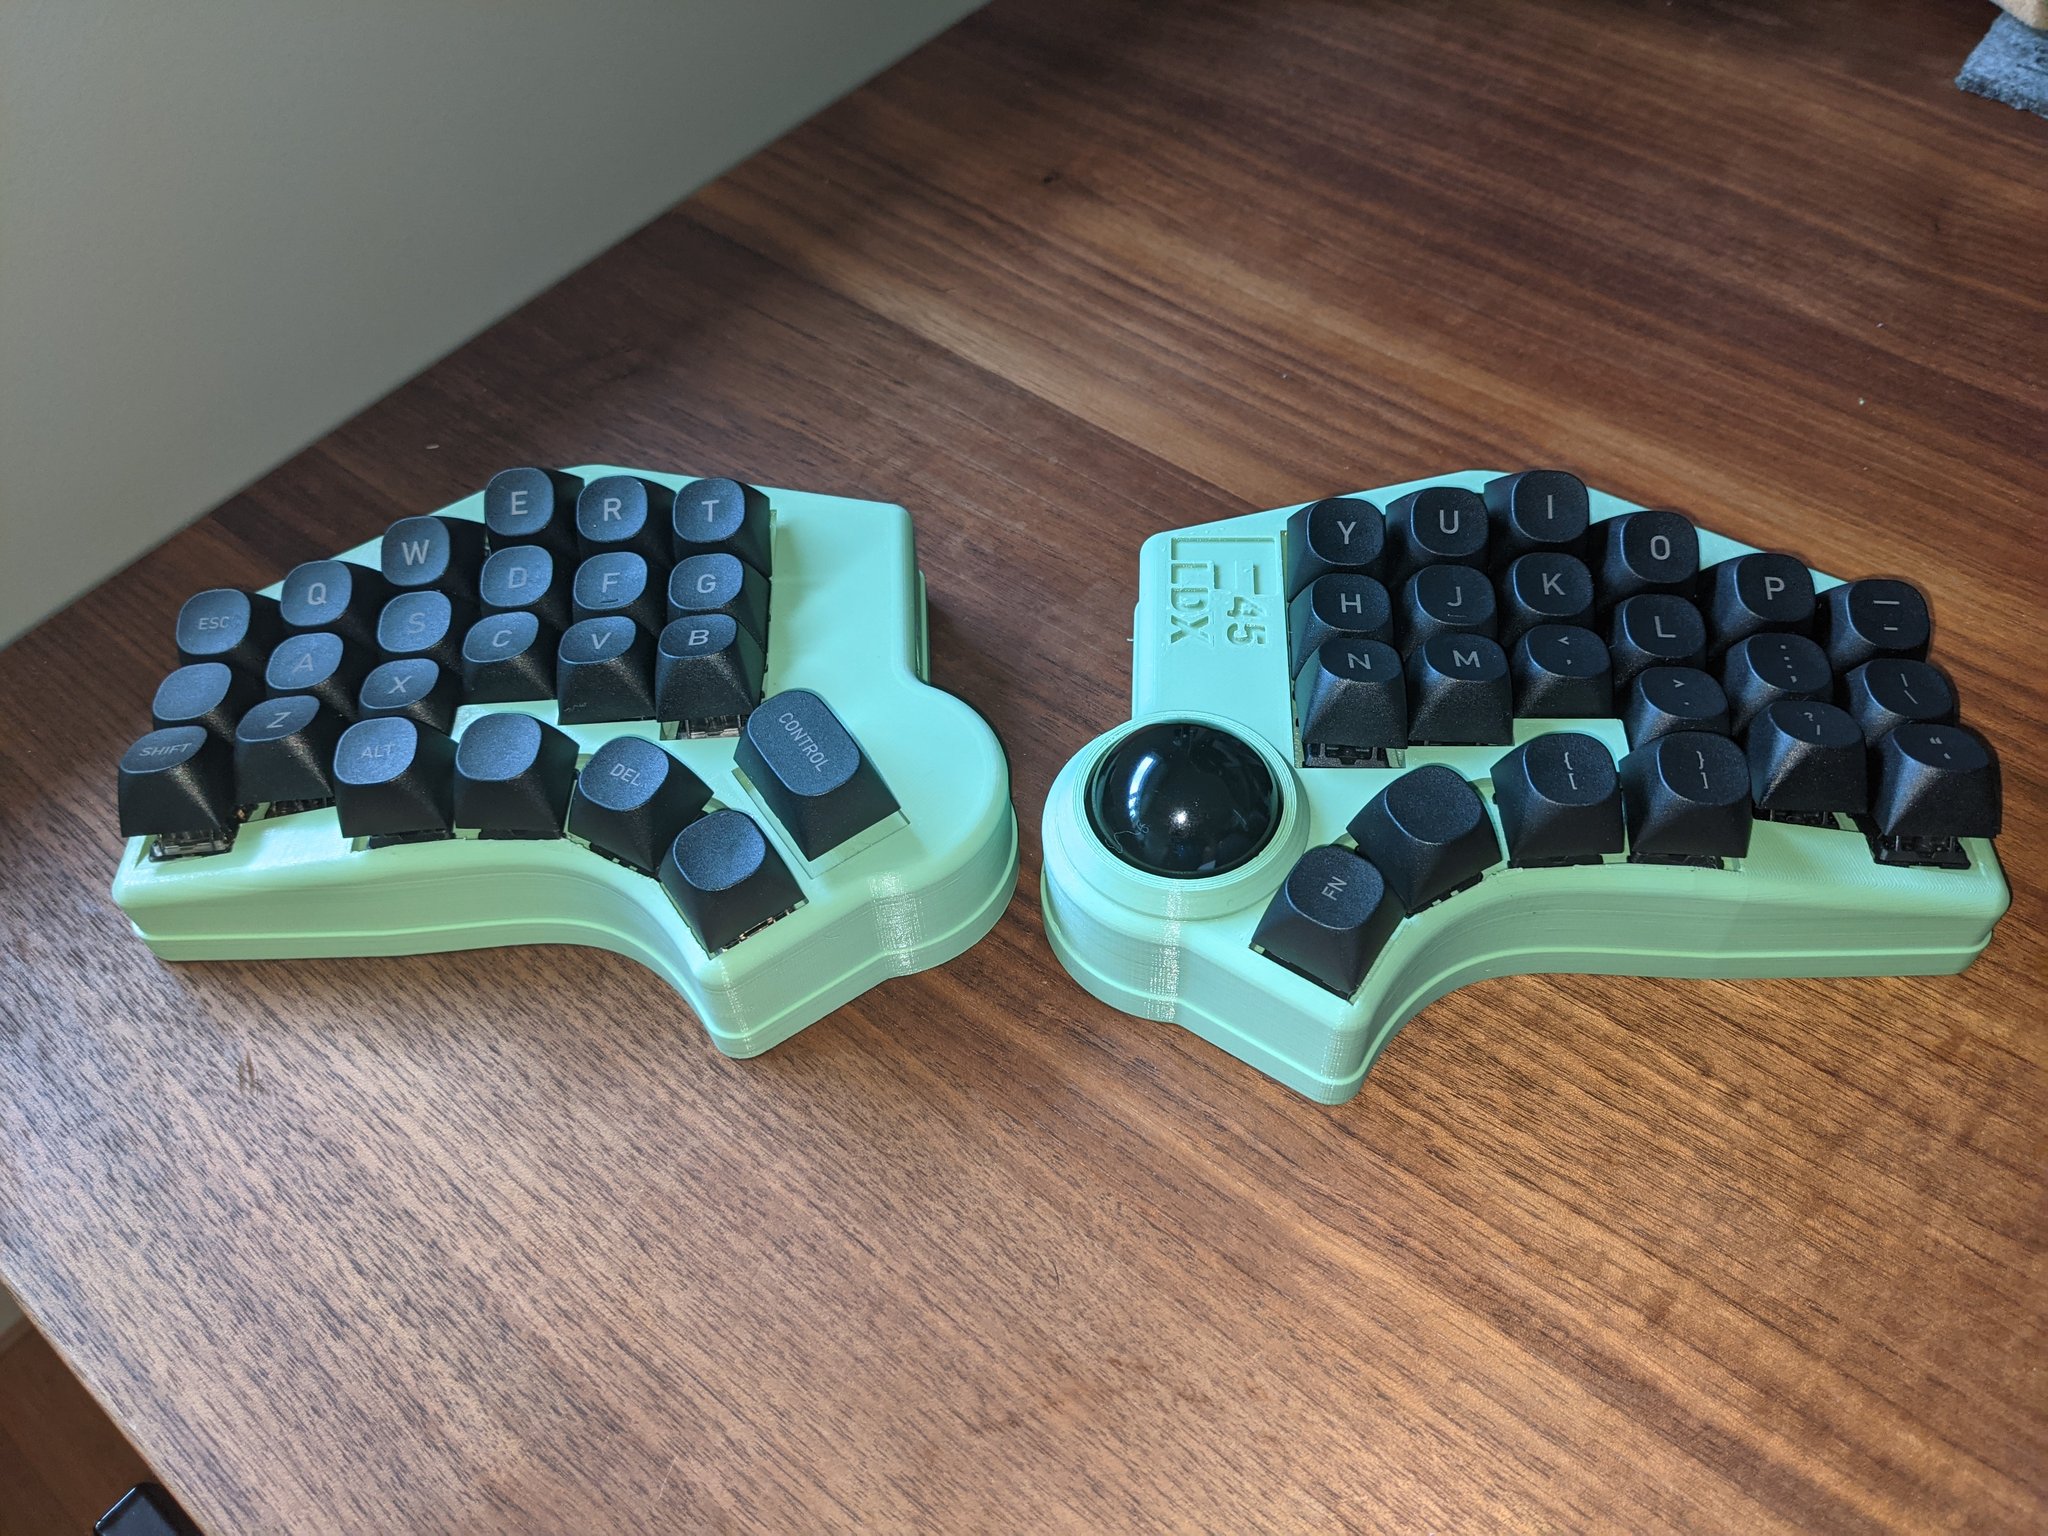 FLDX45 keyboard 2021-07